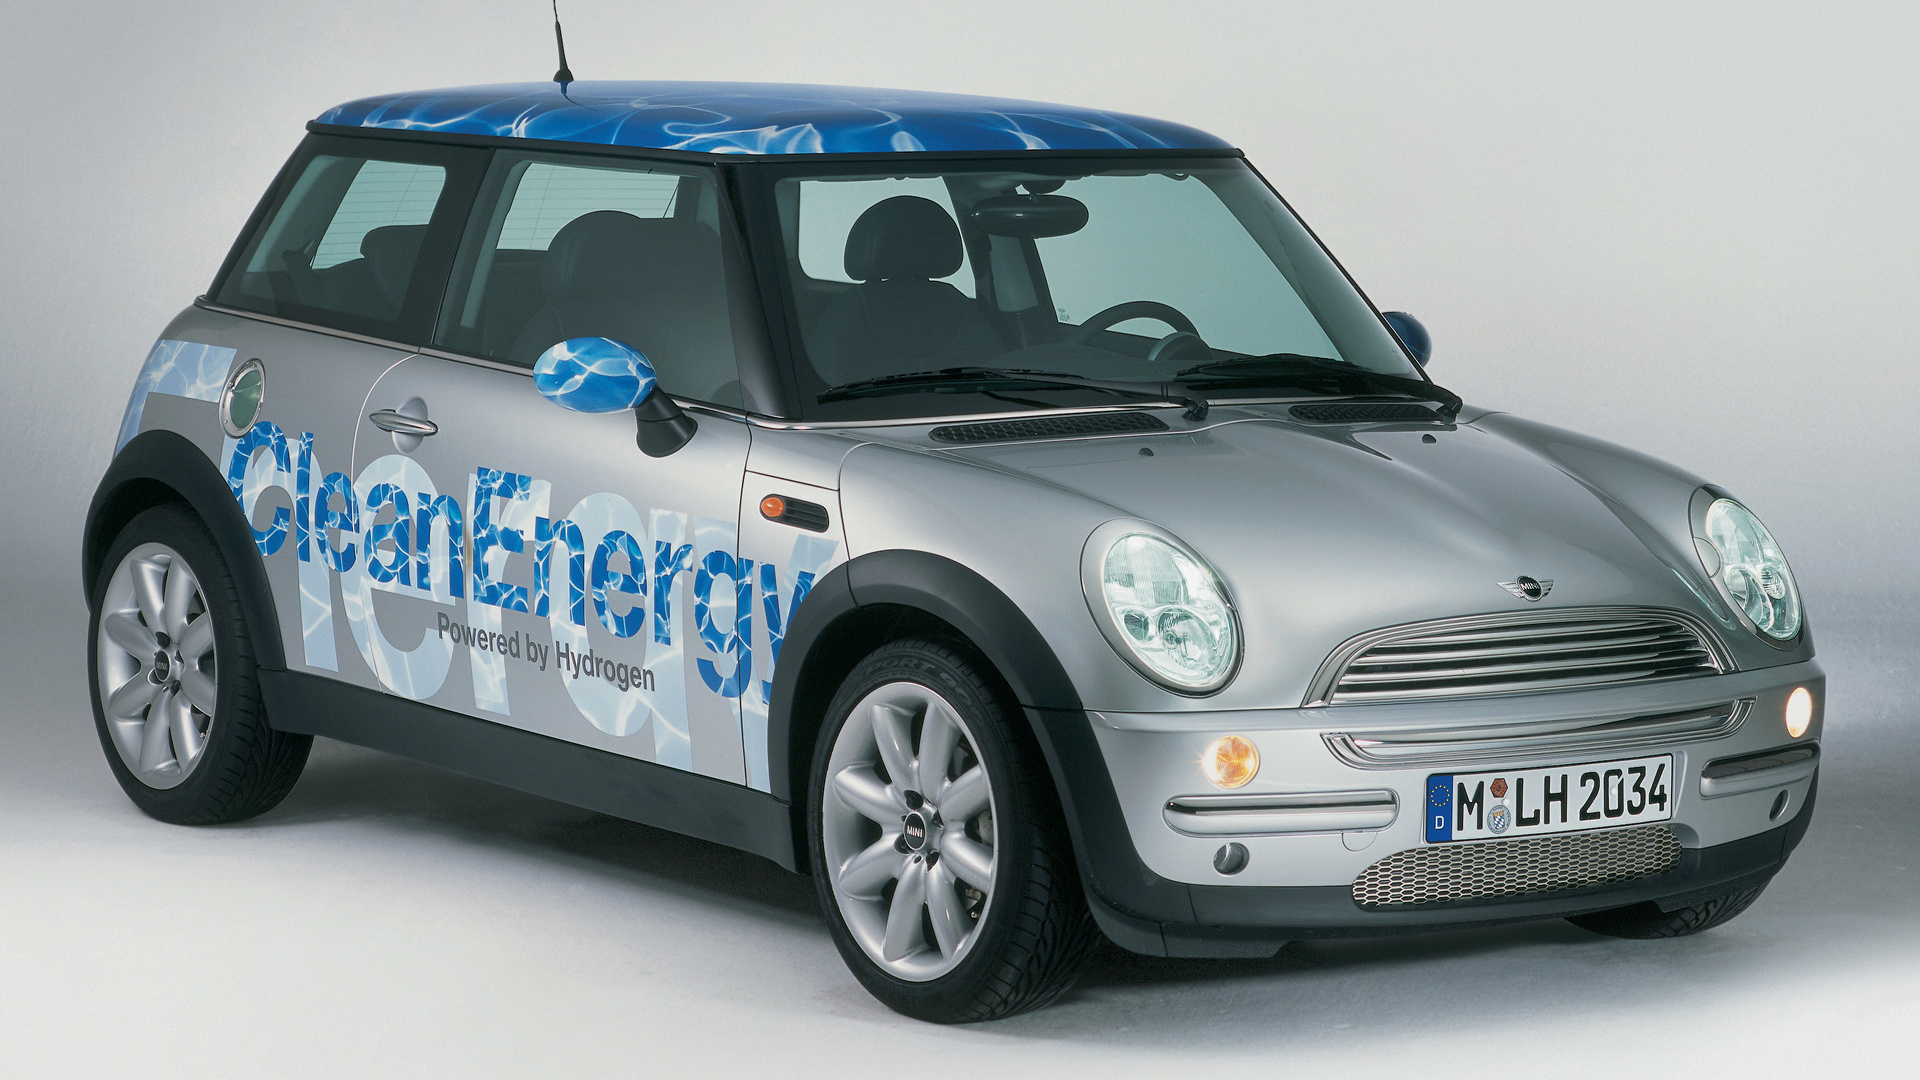 Vehicles Mini Cooper Hydrogen Concept HD Wallpaper | Background Image